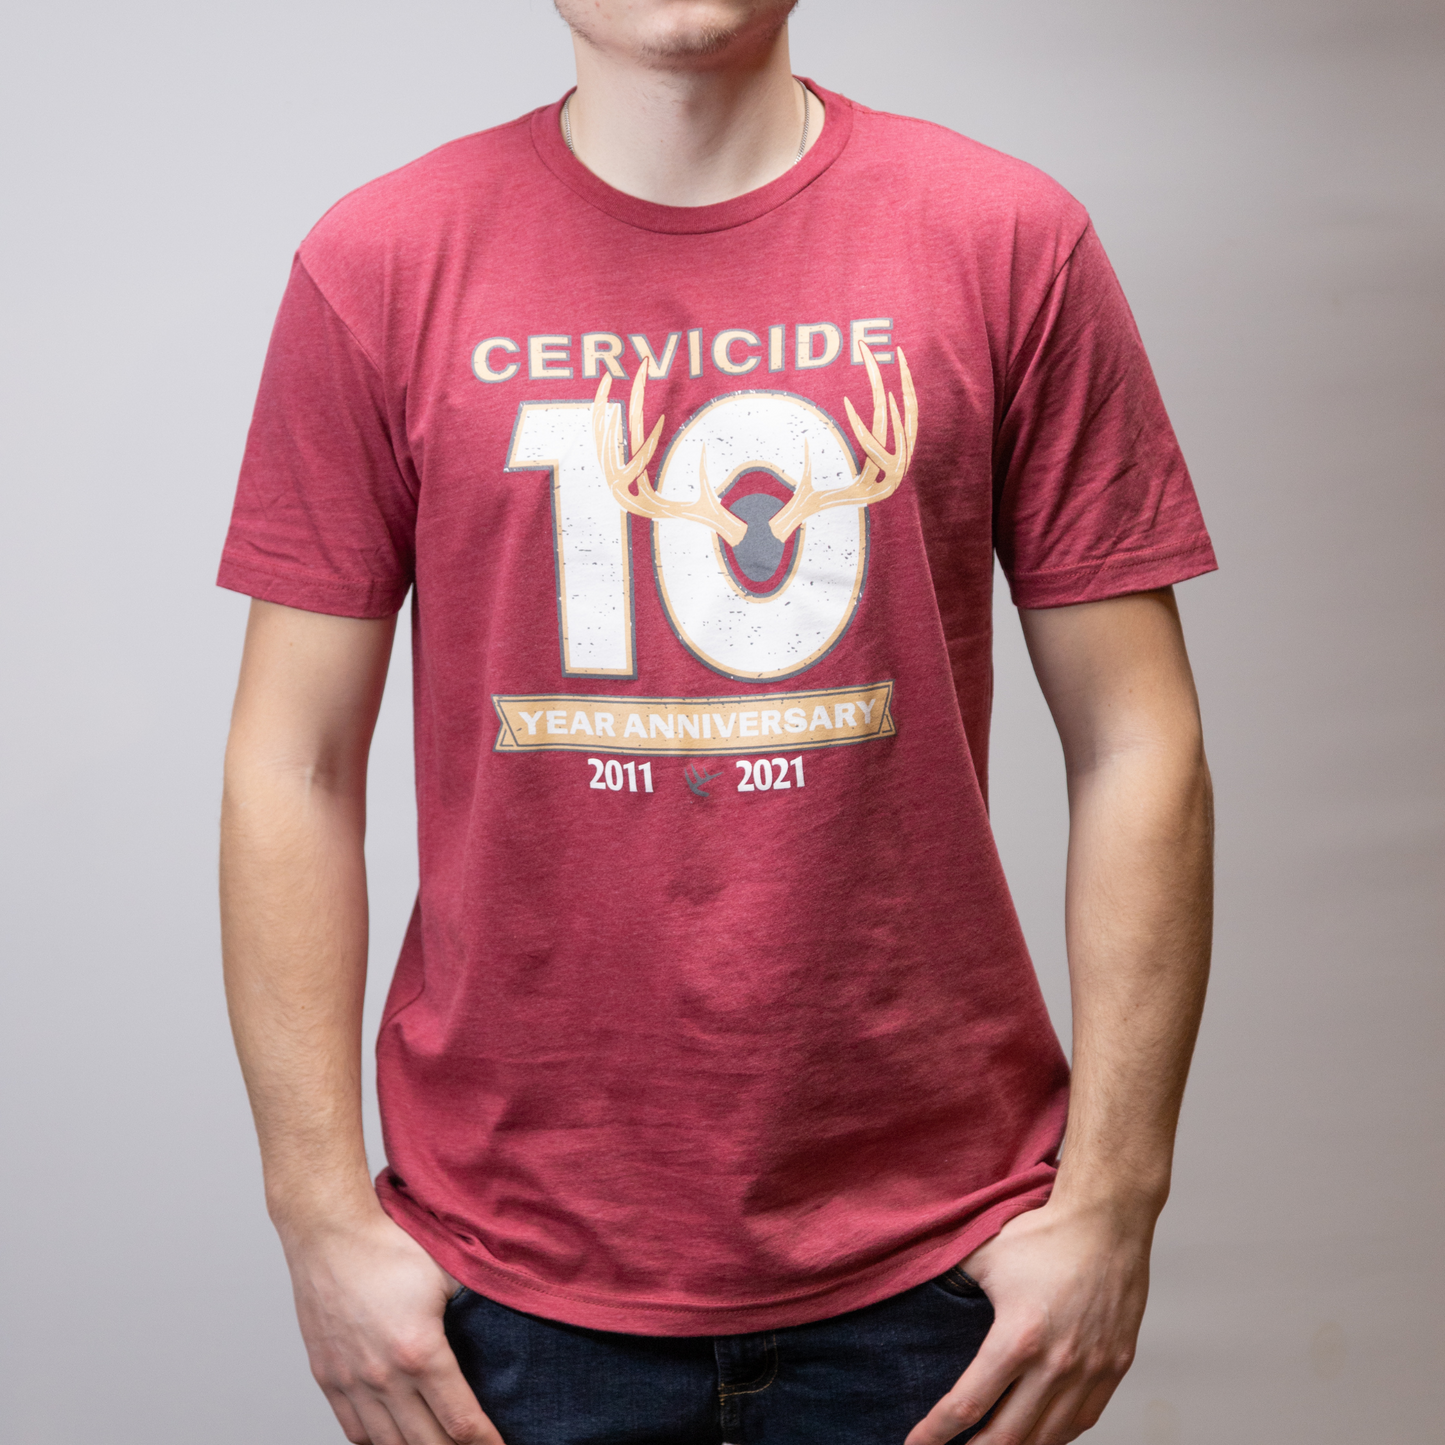 Cervicide 10th Anniversary T-Shirt